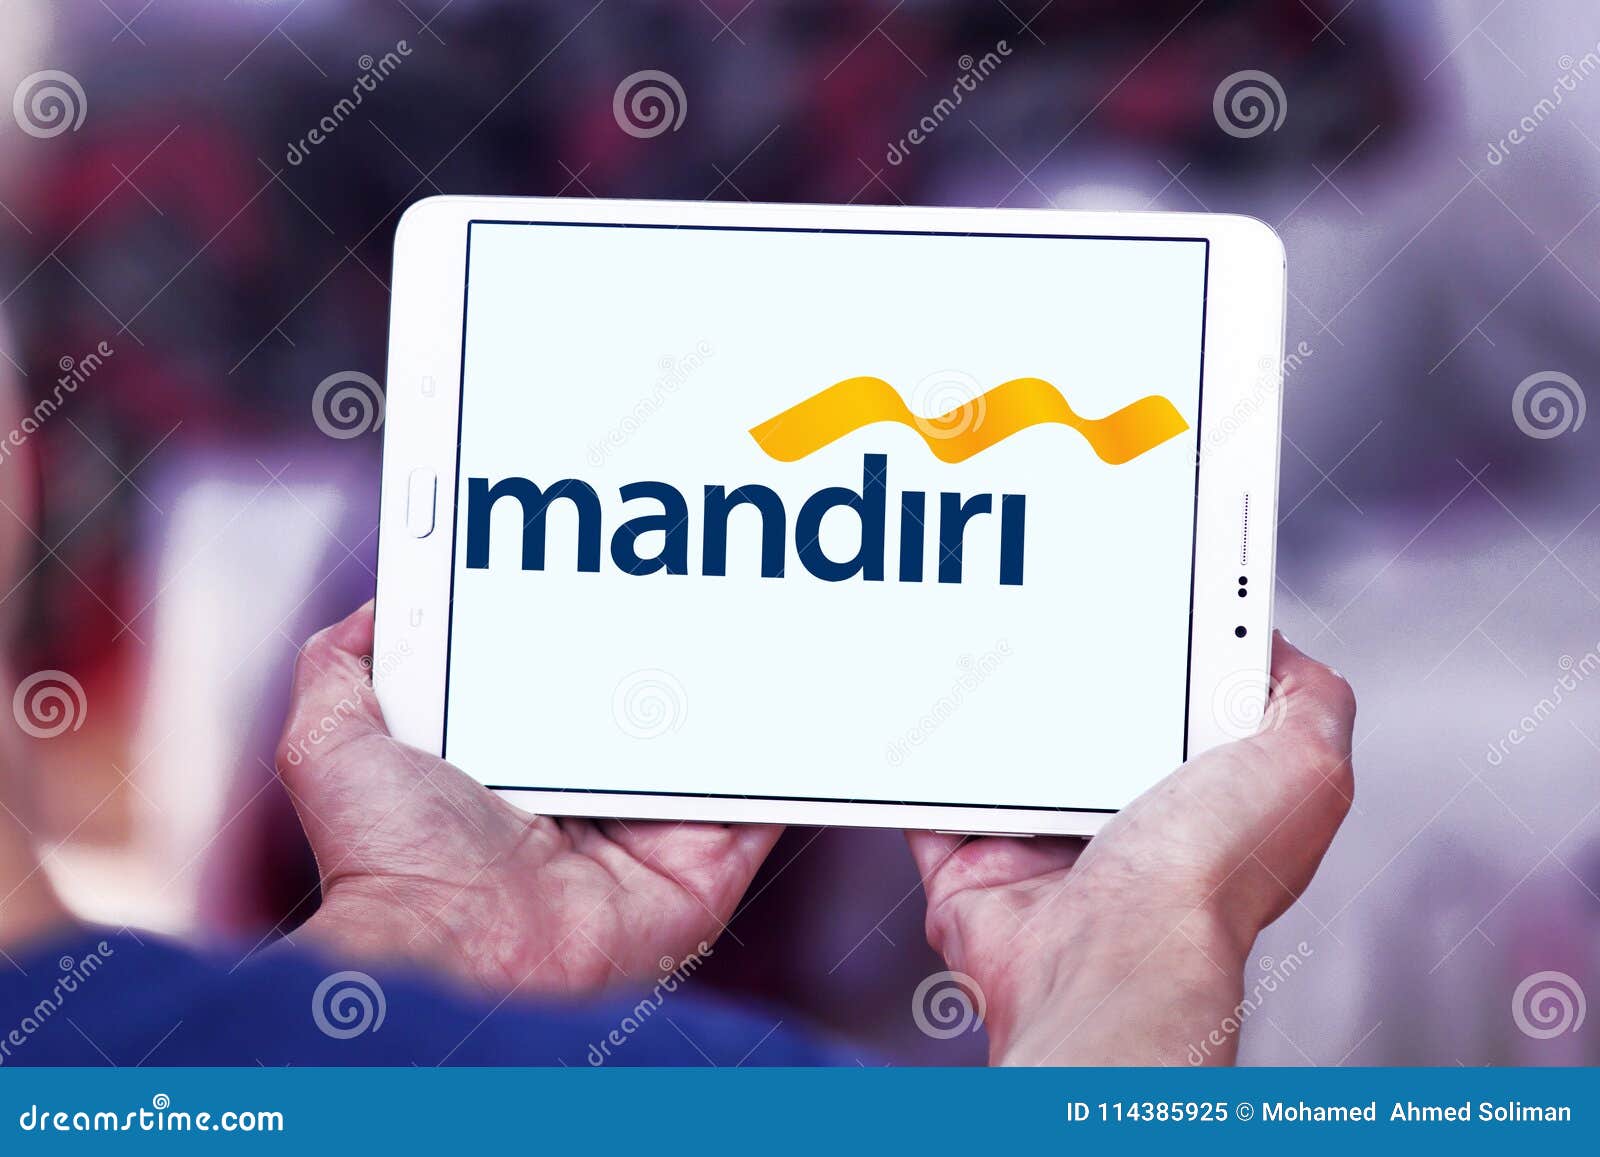 Bank Mandiri logo editorial image. Image of funds, life - 114385925